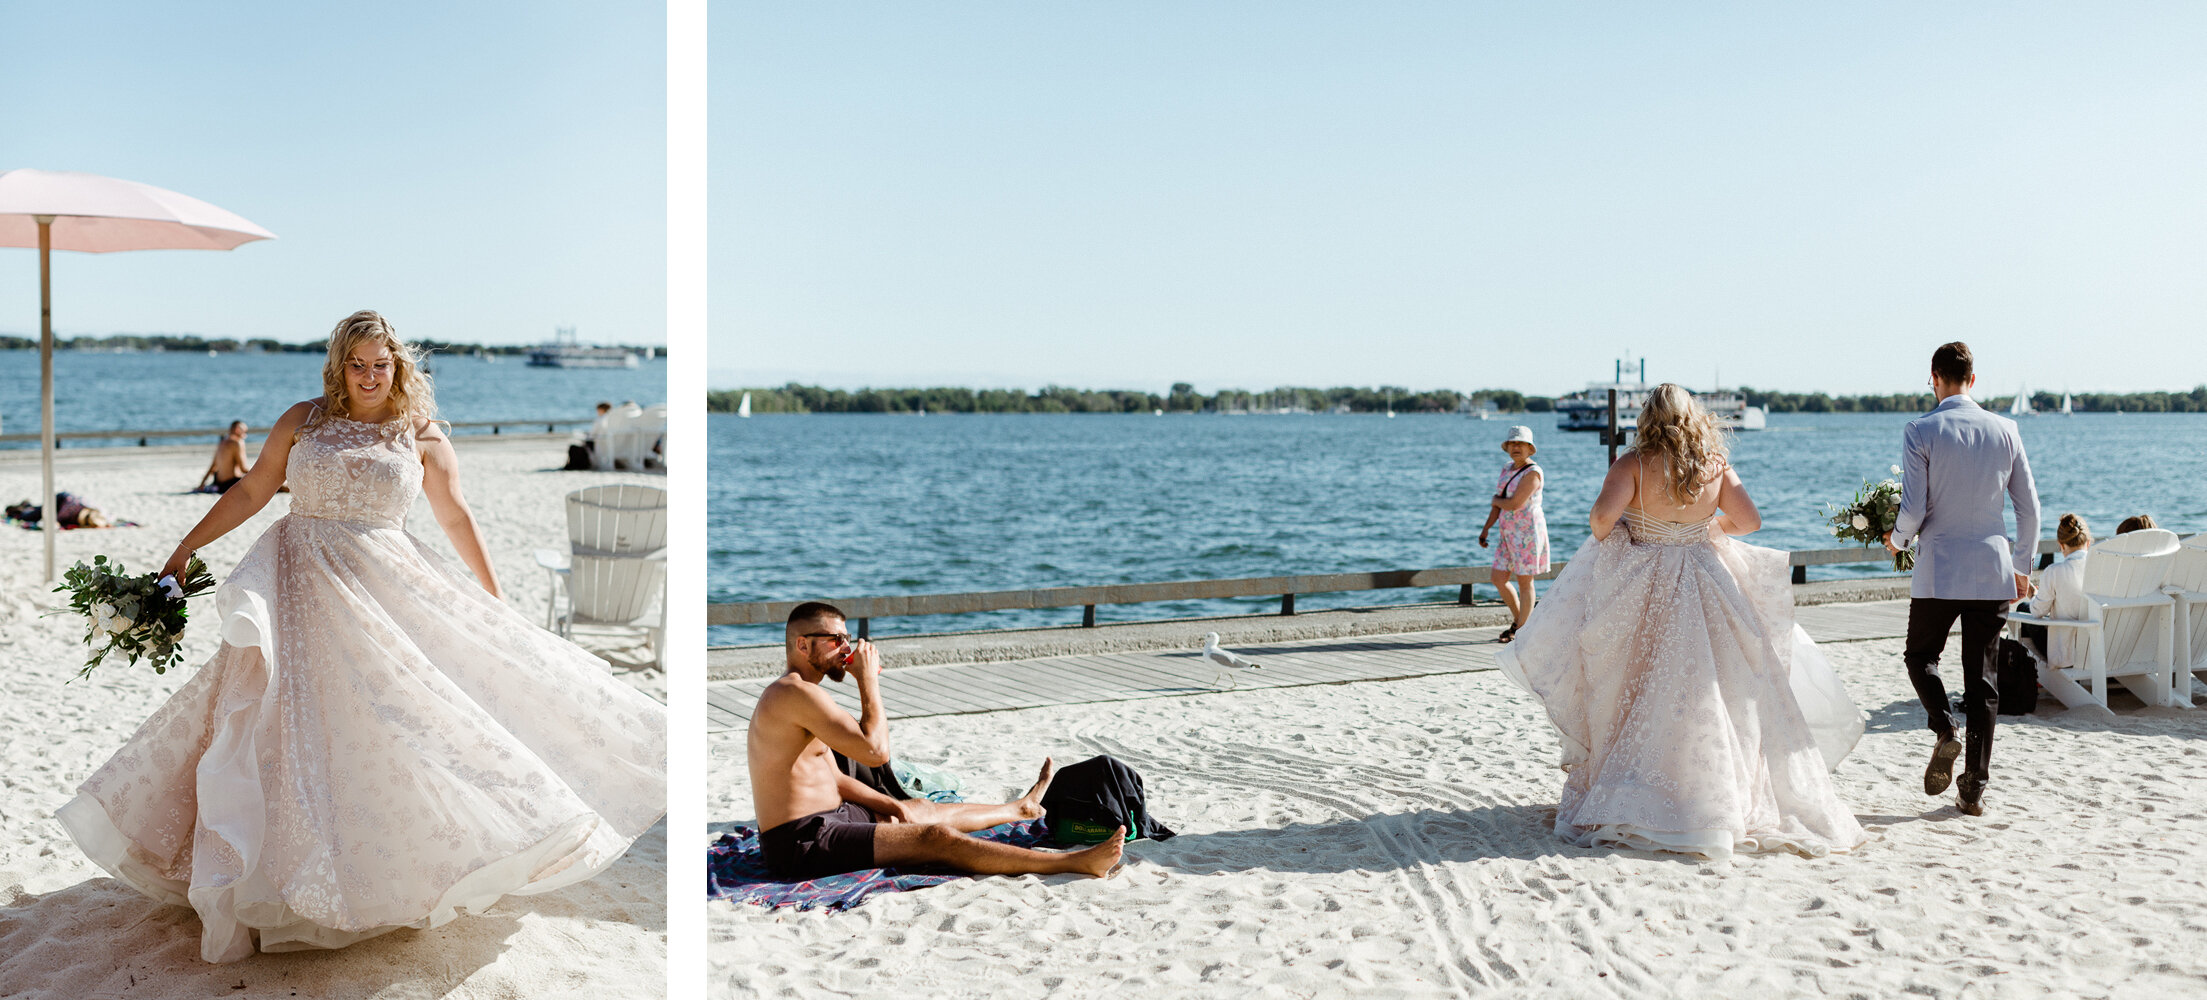 120-cherry-beach-Wedding-Toronto-Urban-archeo-restuarant-intimate-candid-43.jpg